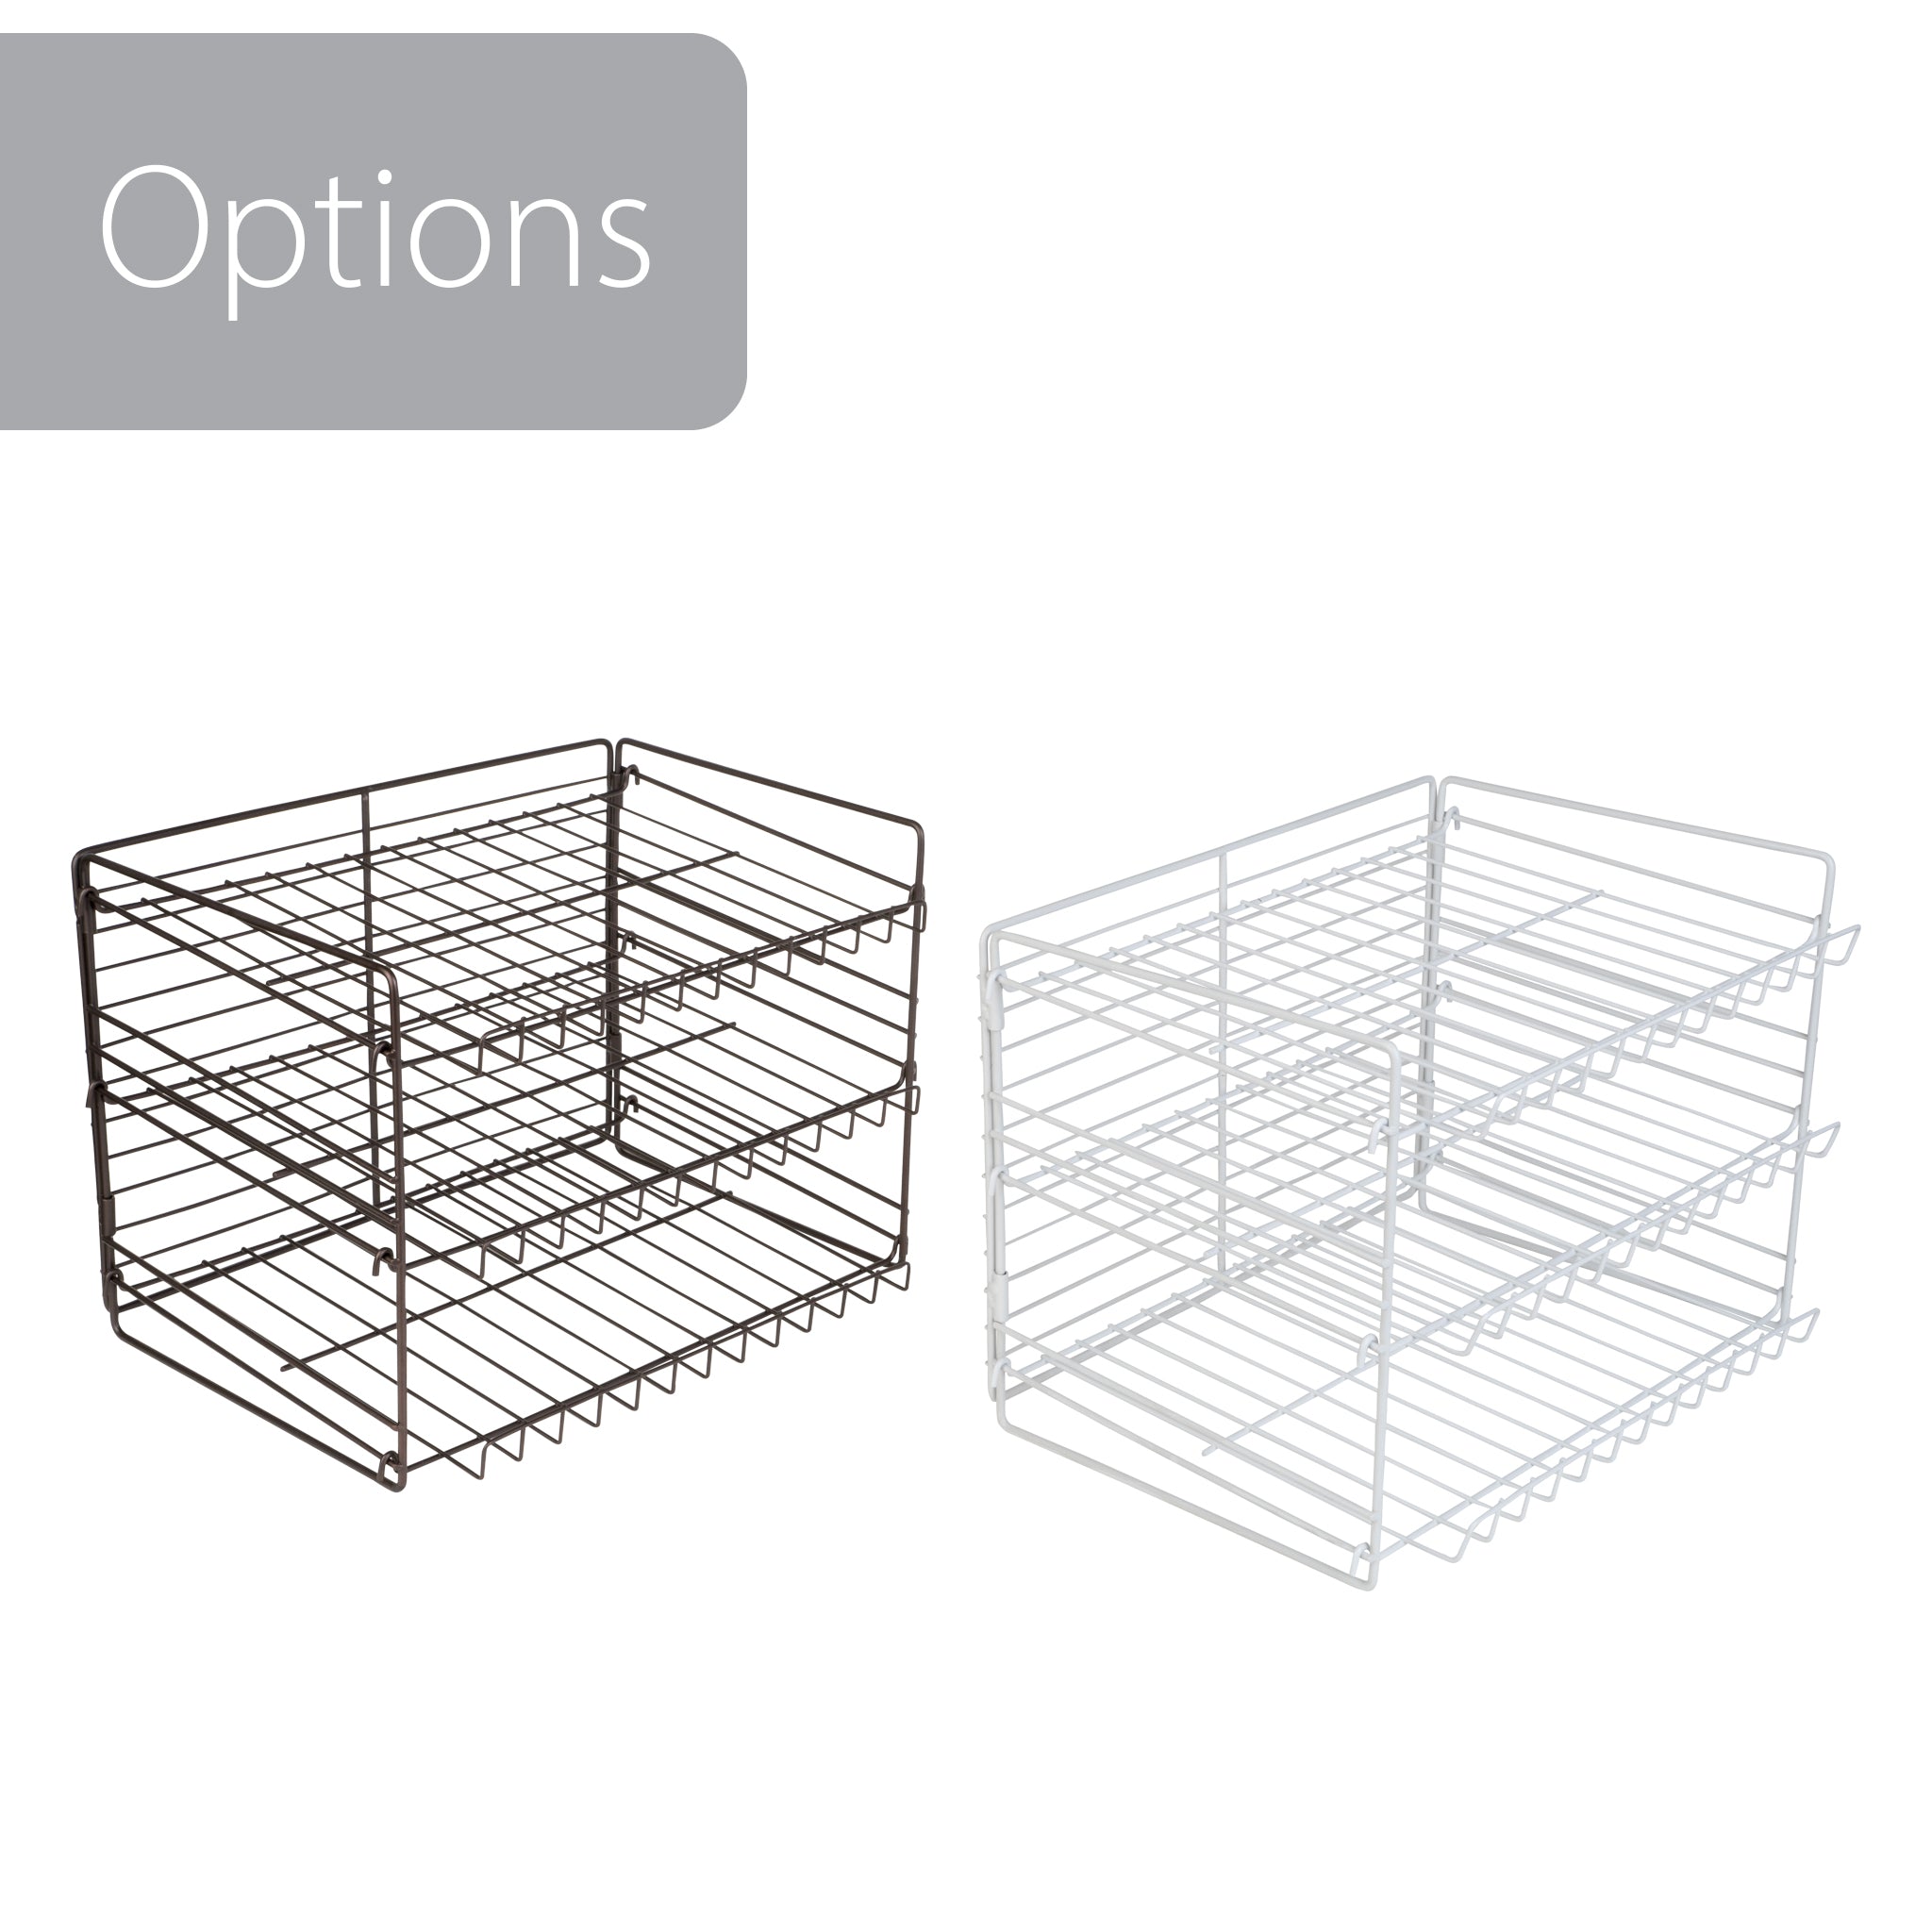 3-Tier Can Rack Organizer - White - Smart Design® 11